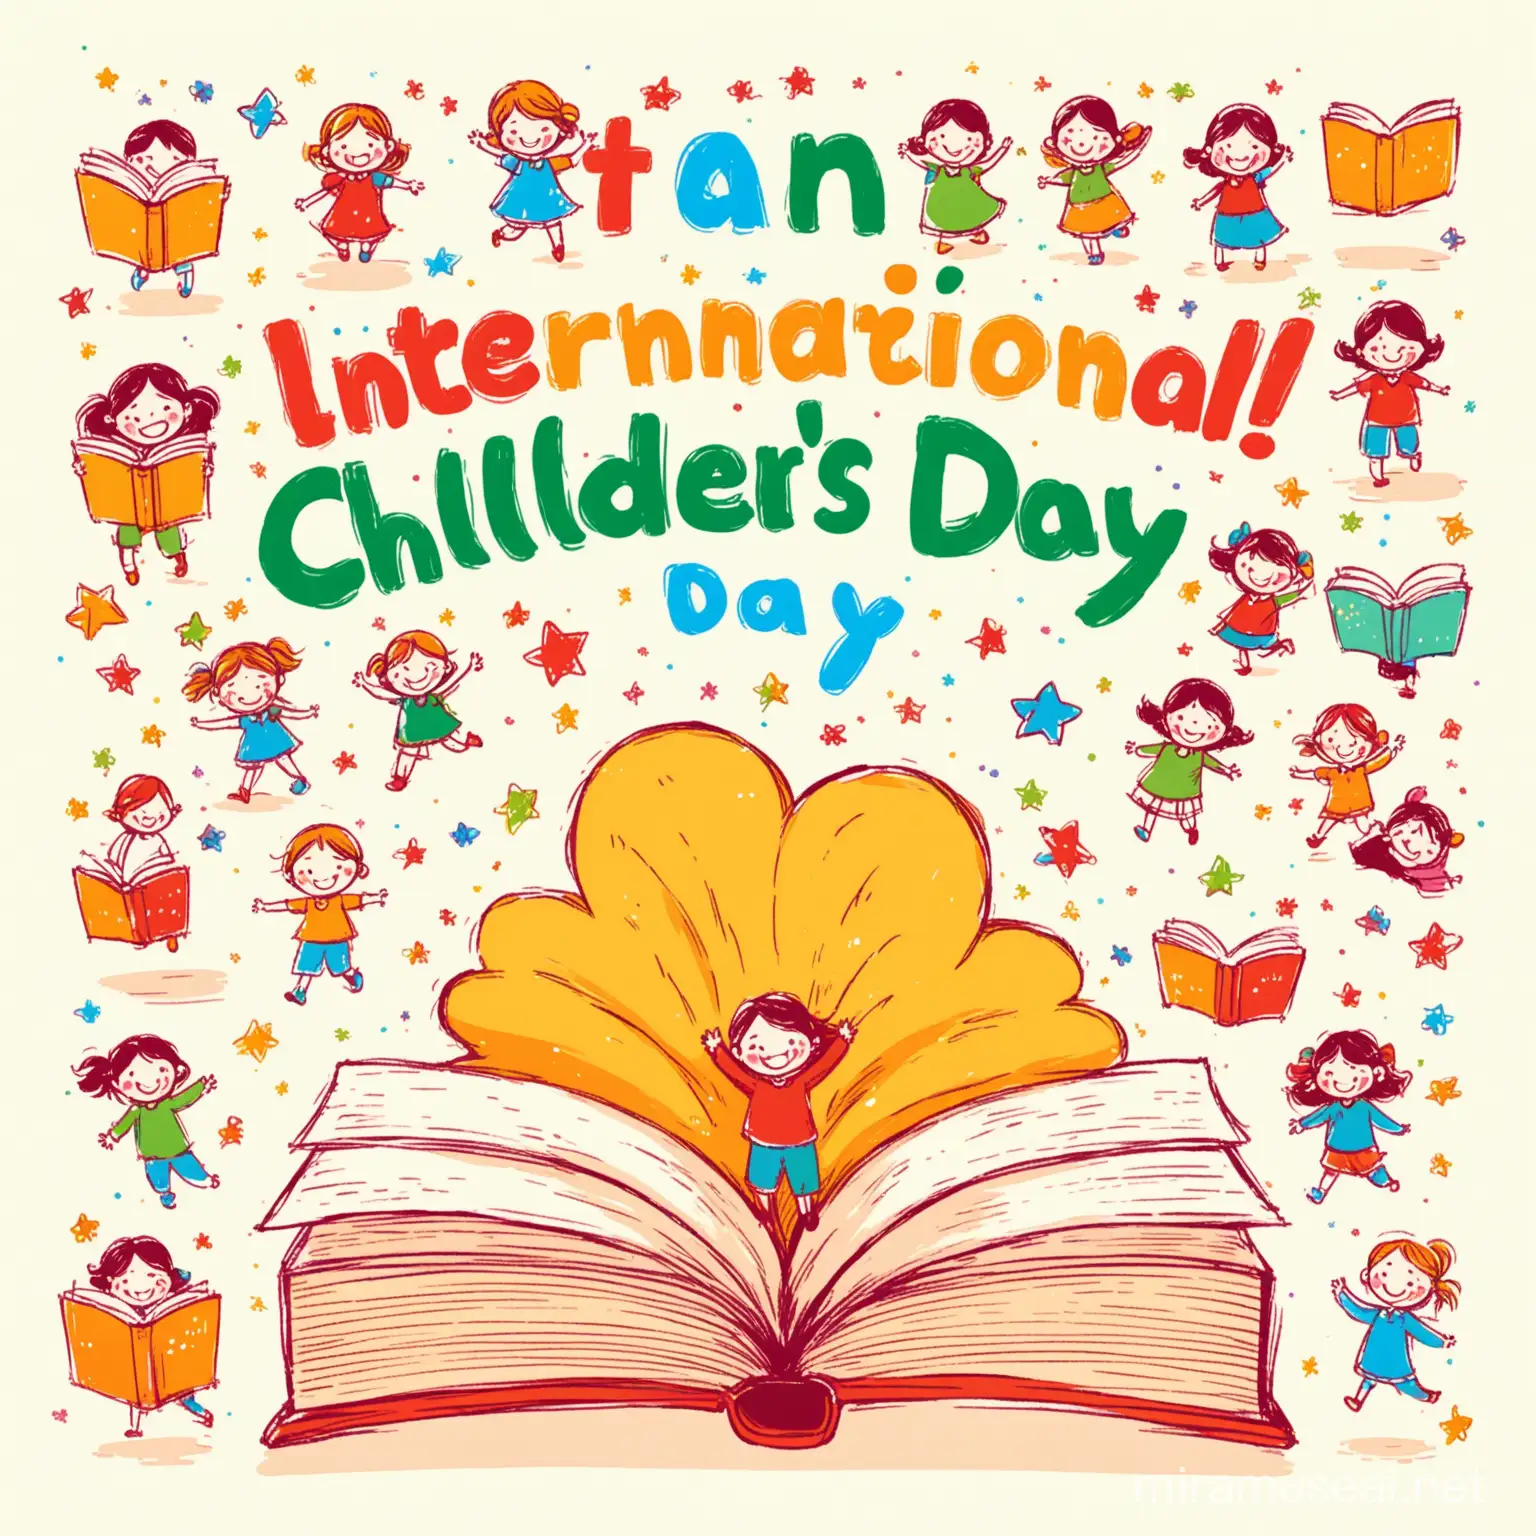 Celebrating International Childrens Book Day with Colorful Childish Illustration